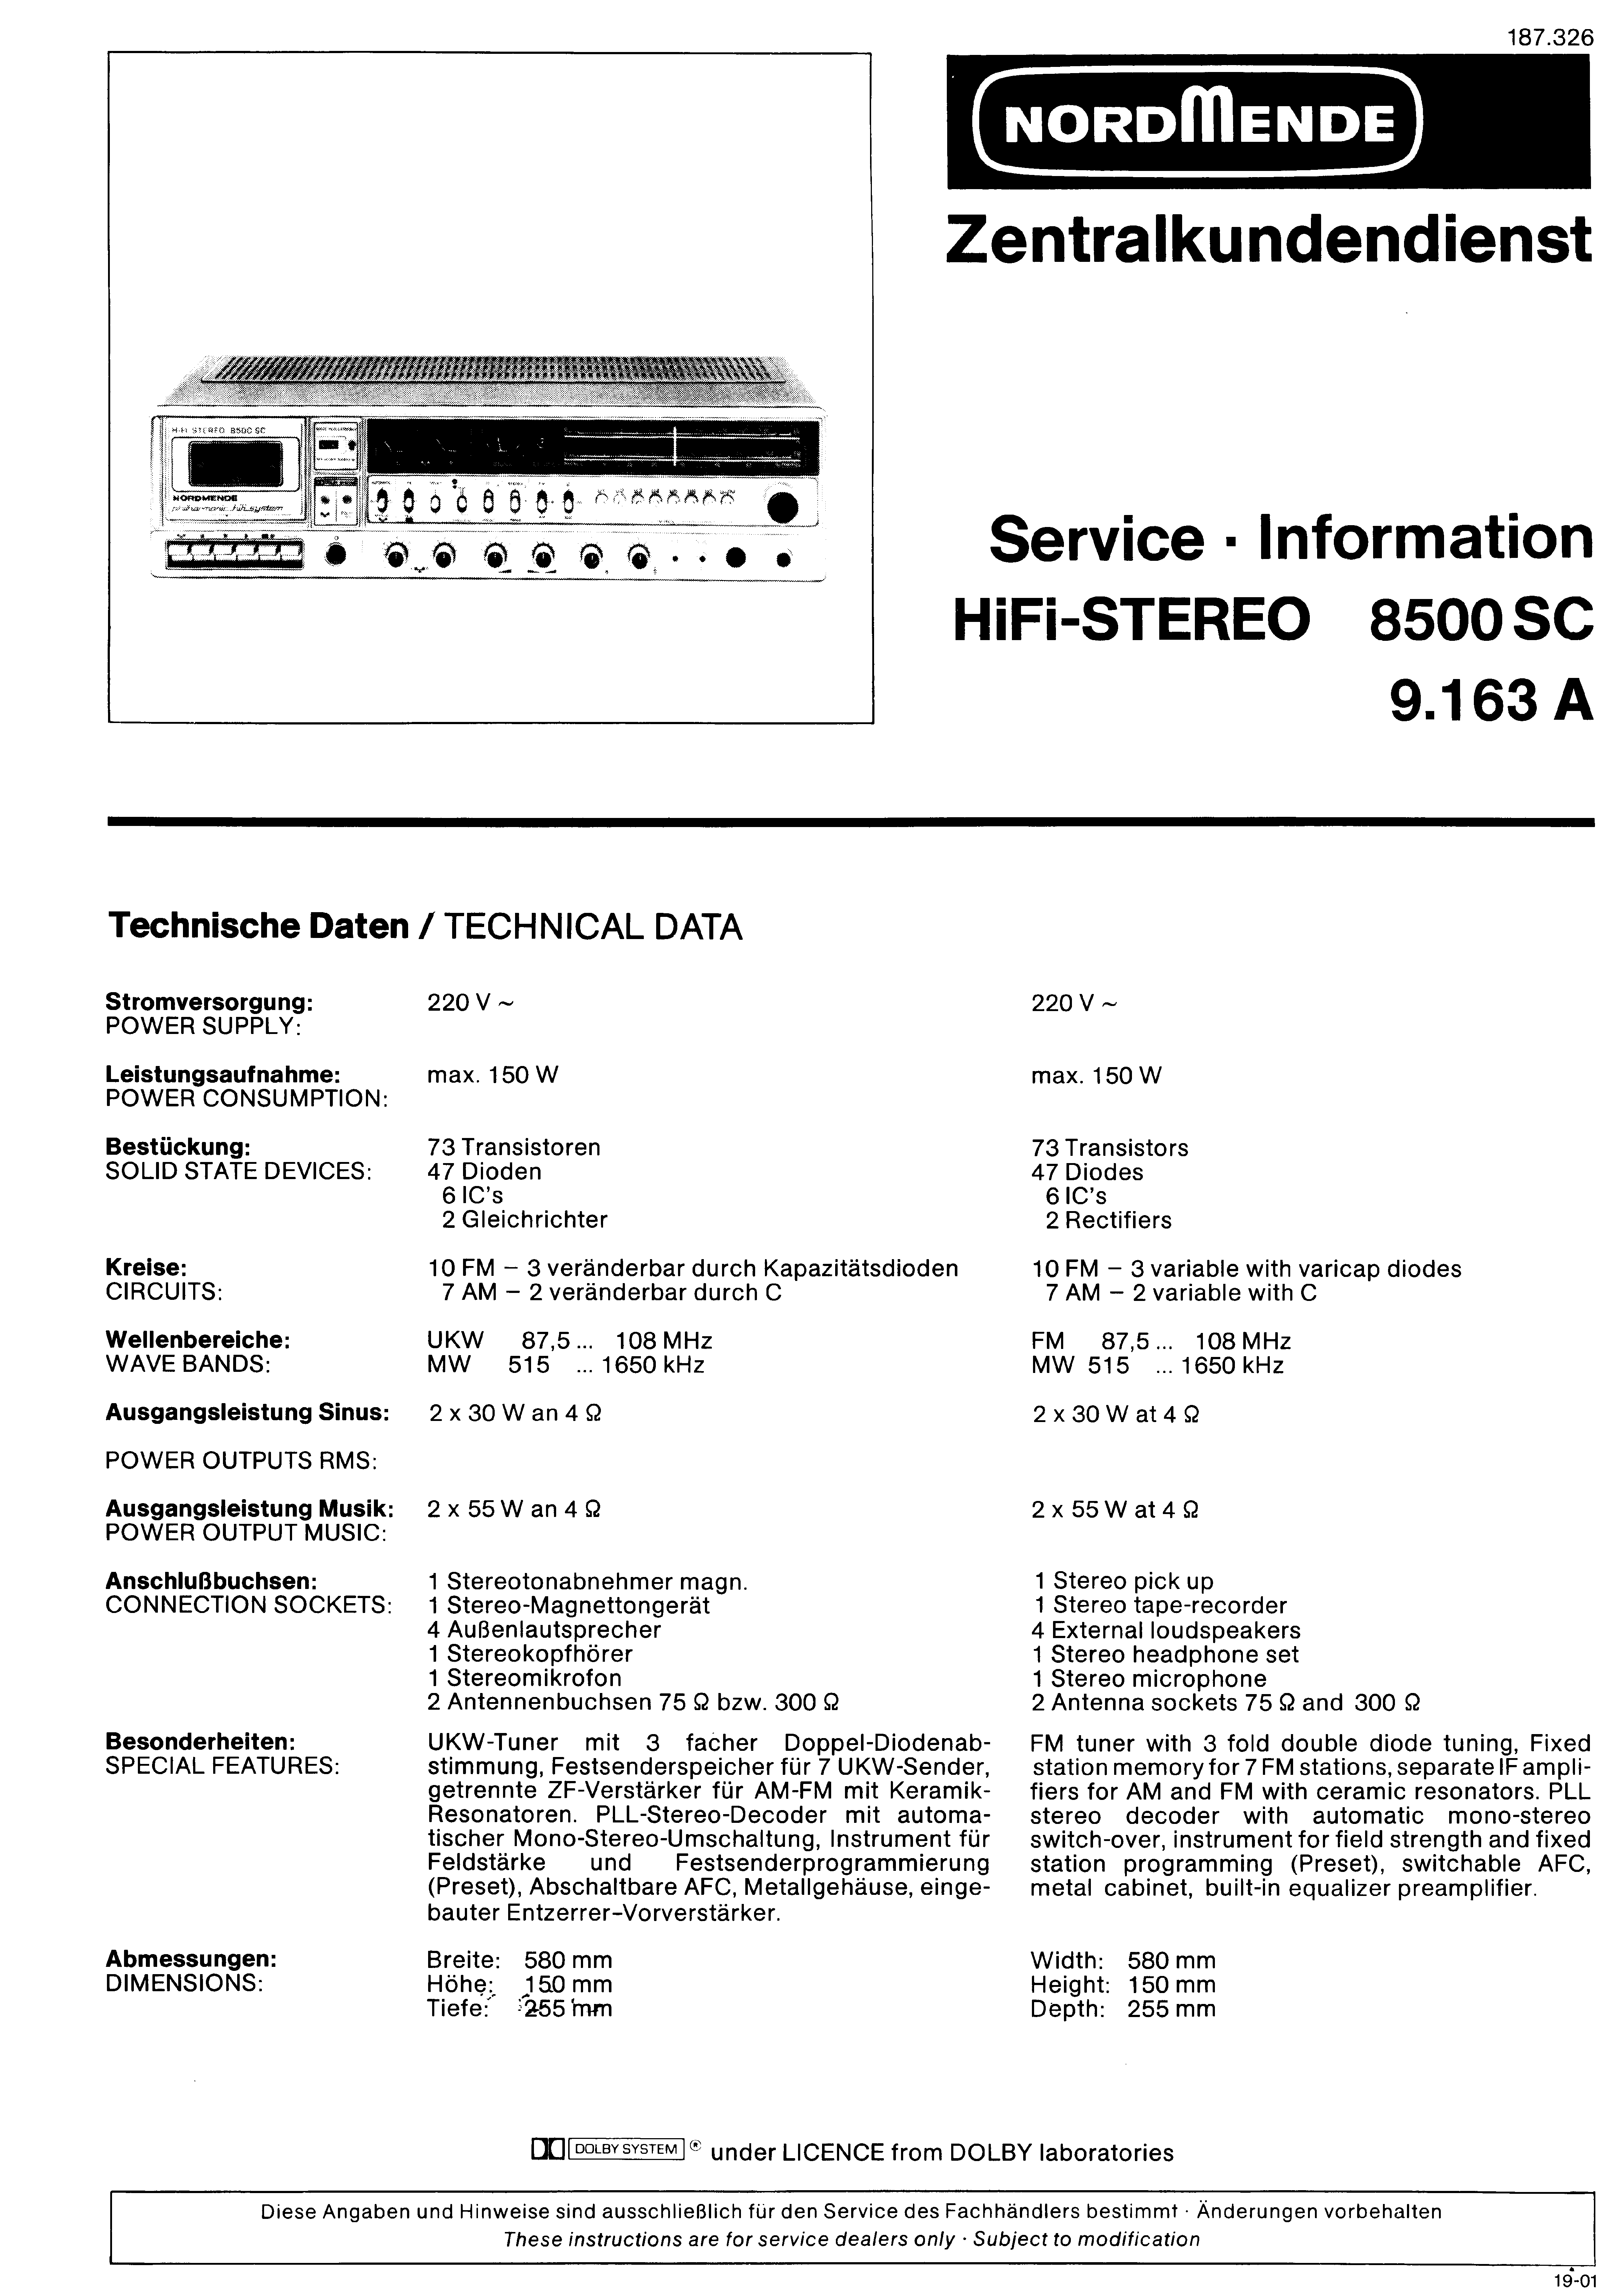 NORDMENDE HIFI-STEREO 8500 SC SM service manual (1st page)